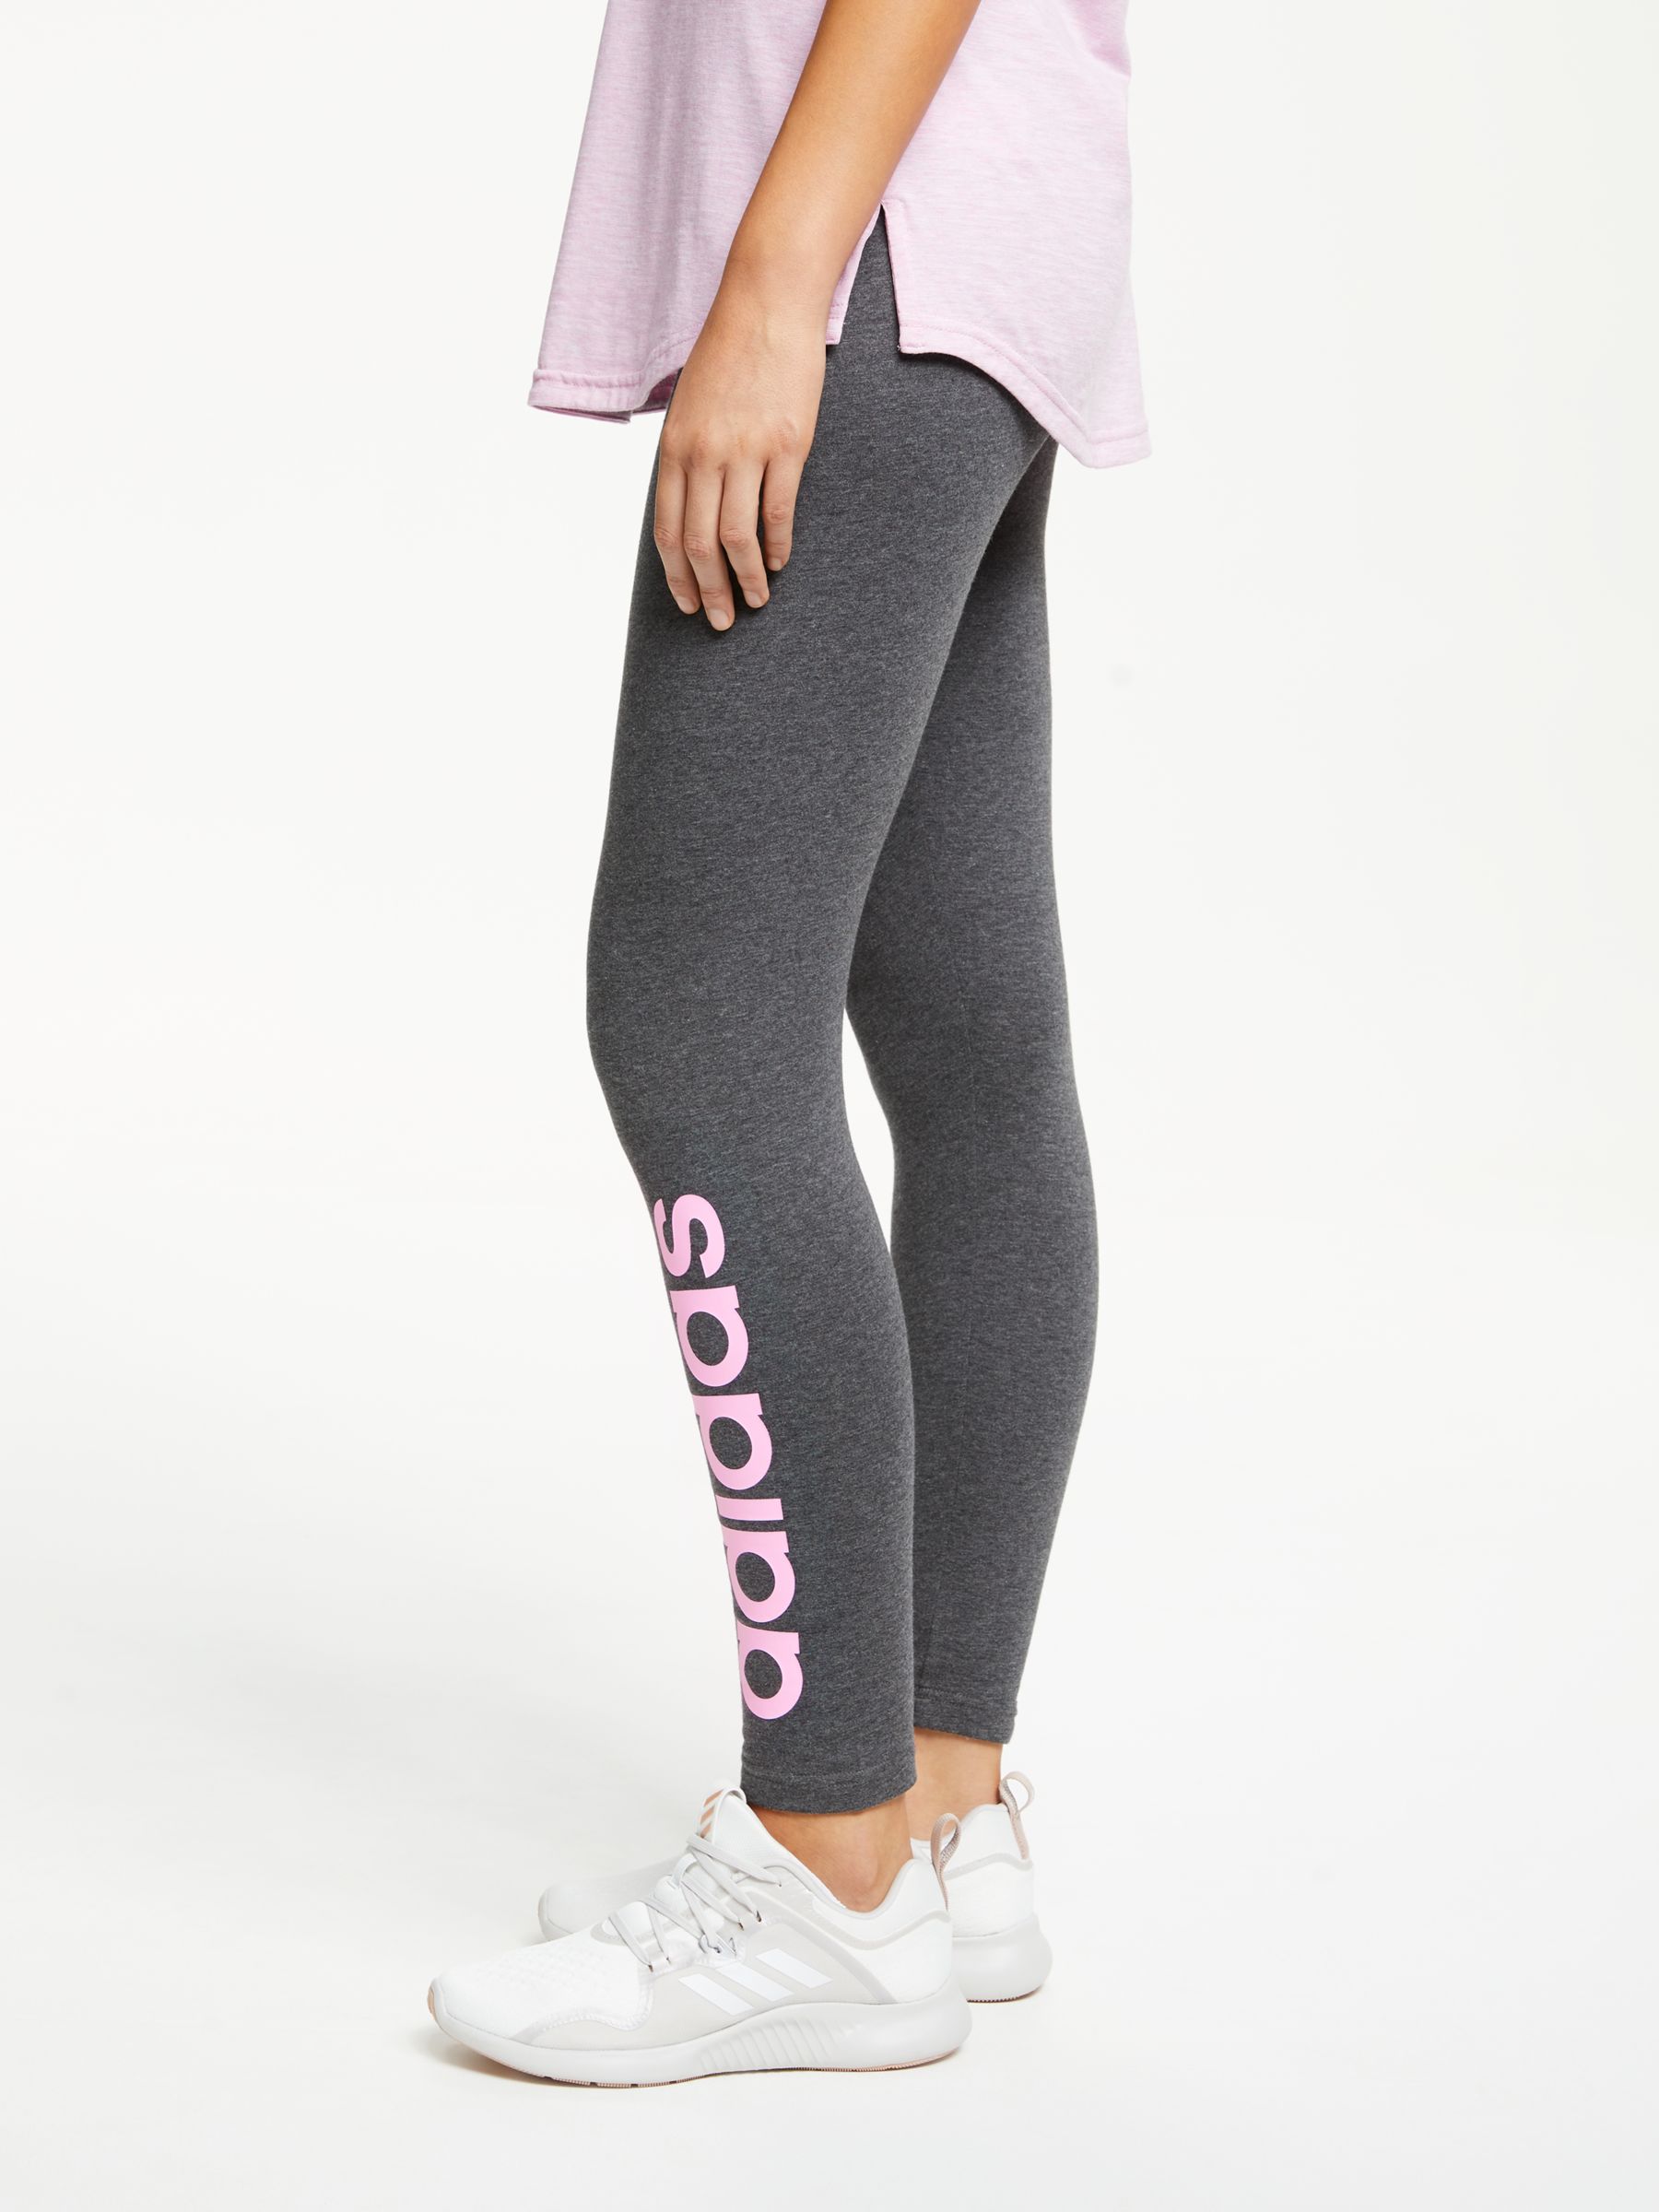 adidas pink and grey leggings